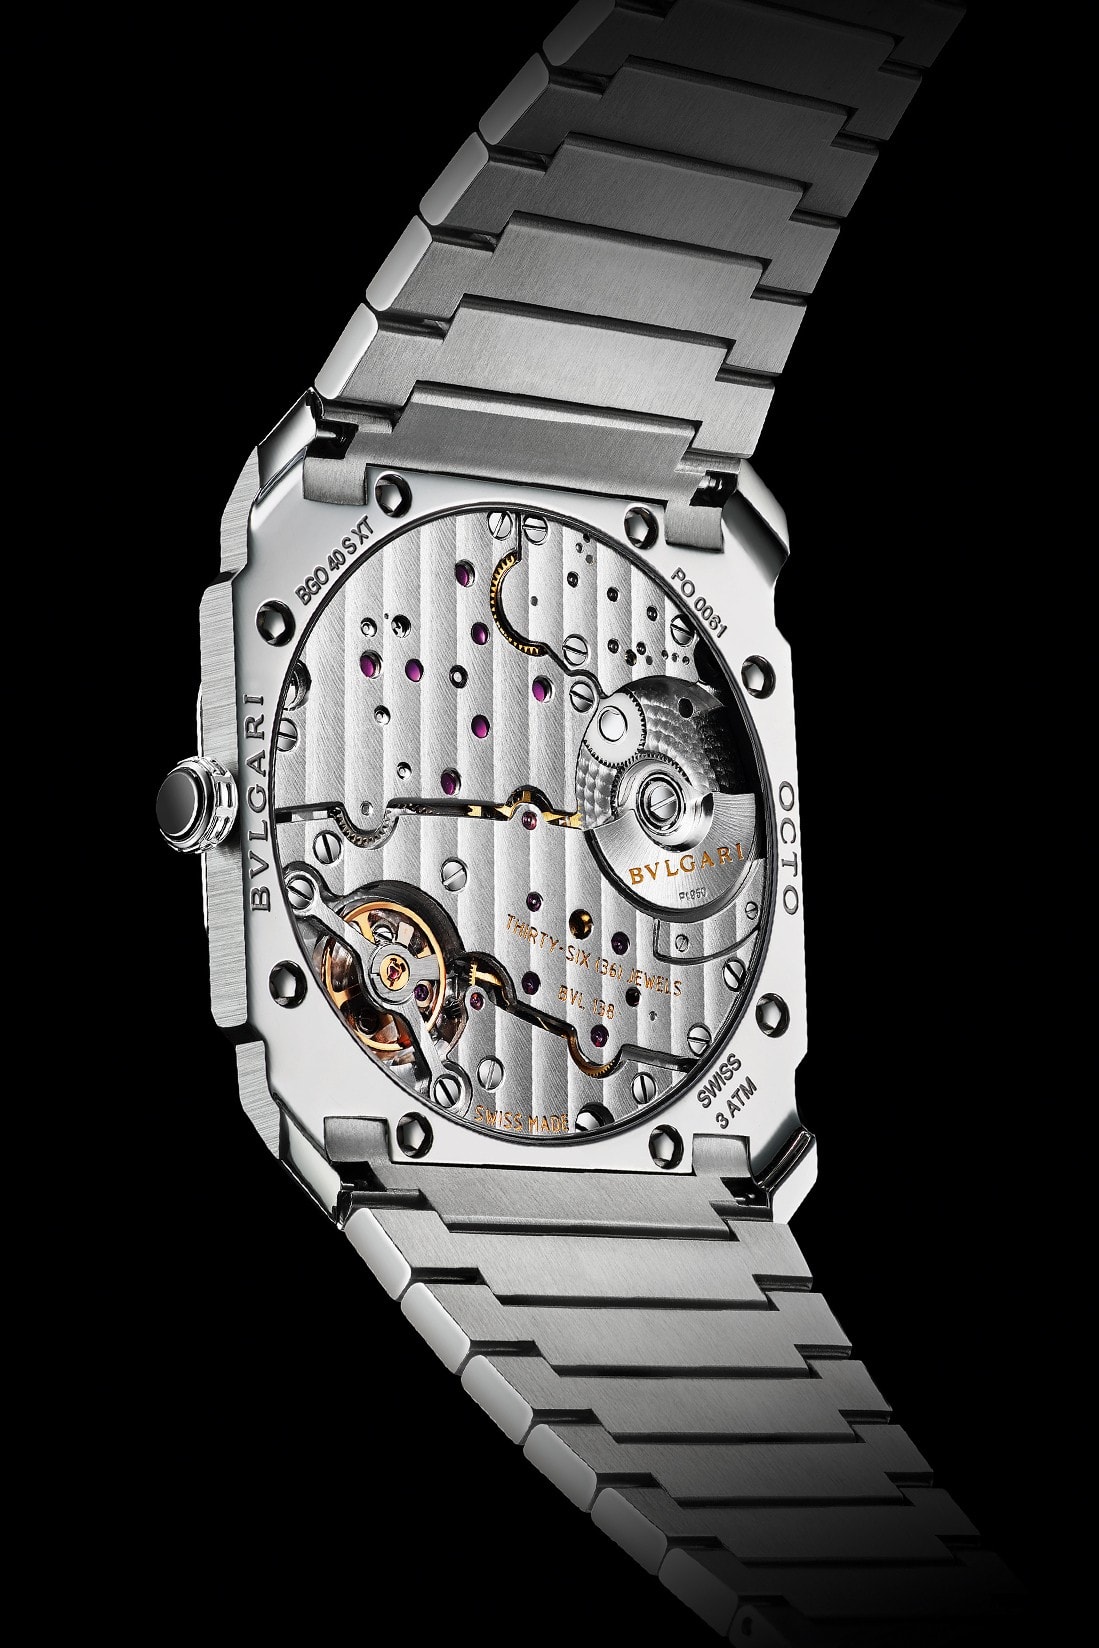 BVLGARI 發表全新 Octo Finissimo S 精鋼鍍銀錶款